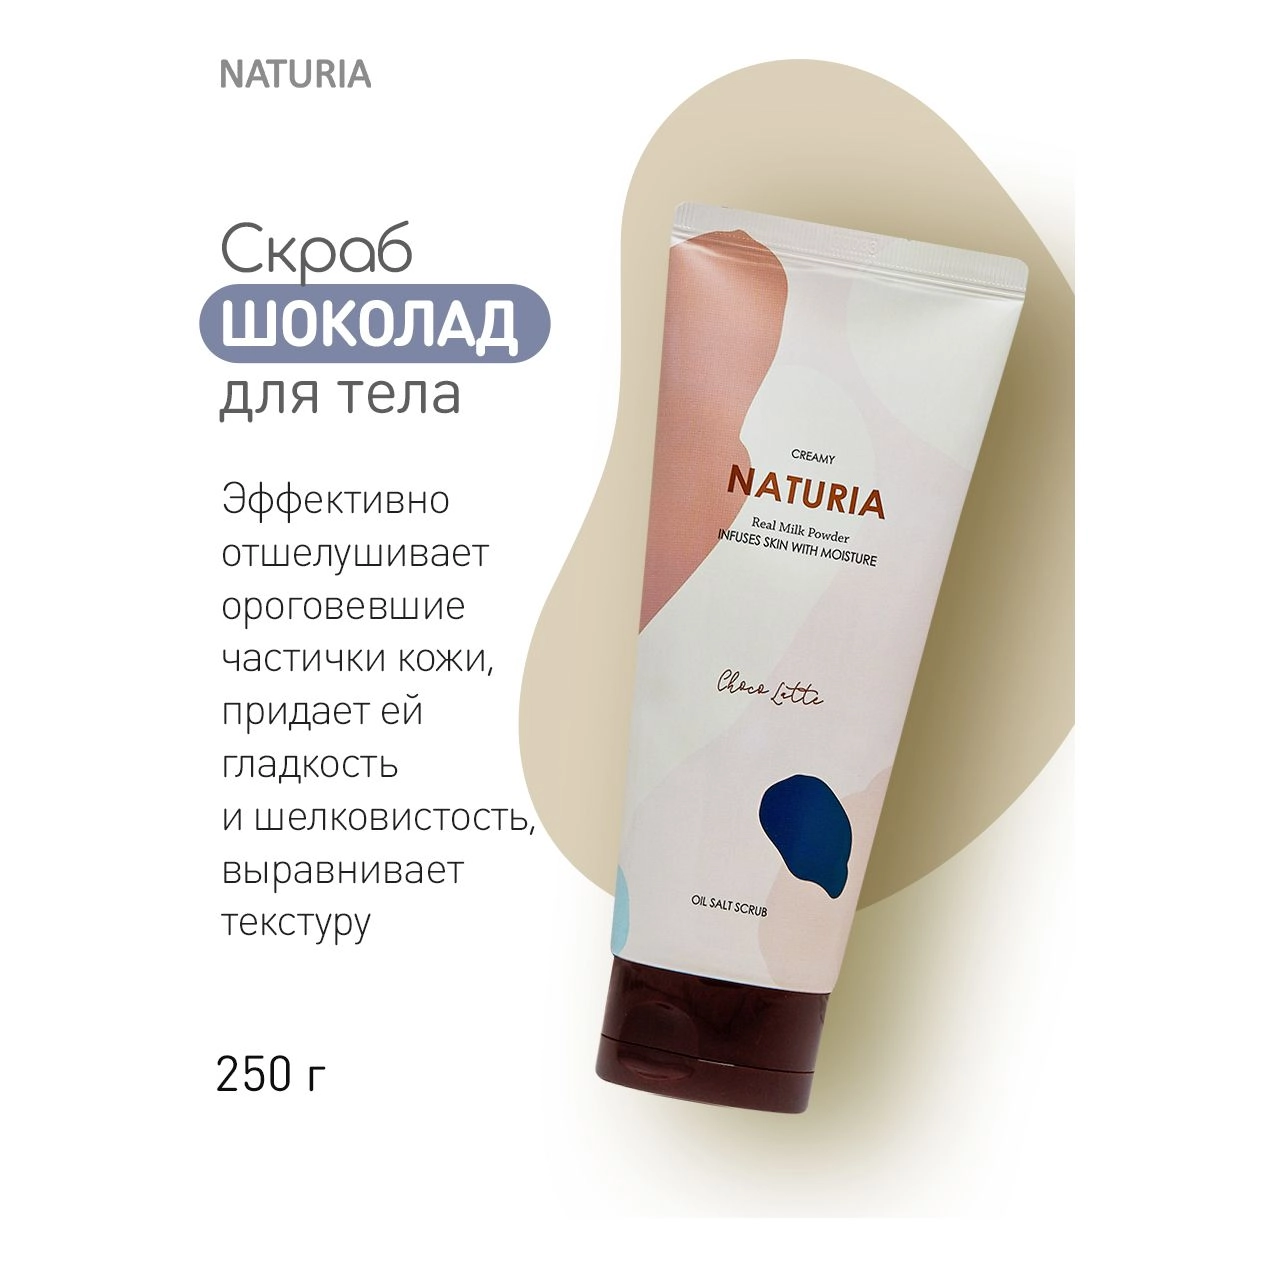 Скраб для тела с ароматом шоколада - Naturia Creamy Oil Salt Scrub Choco Latte, 250 г - фото N4